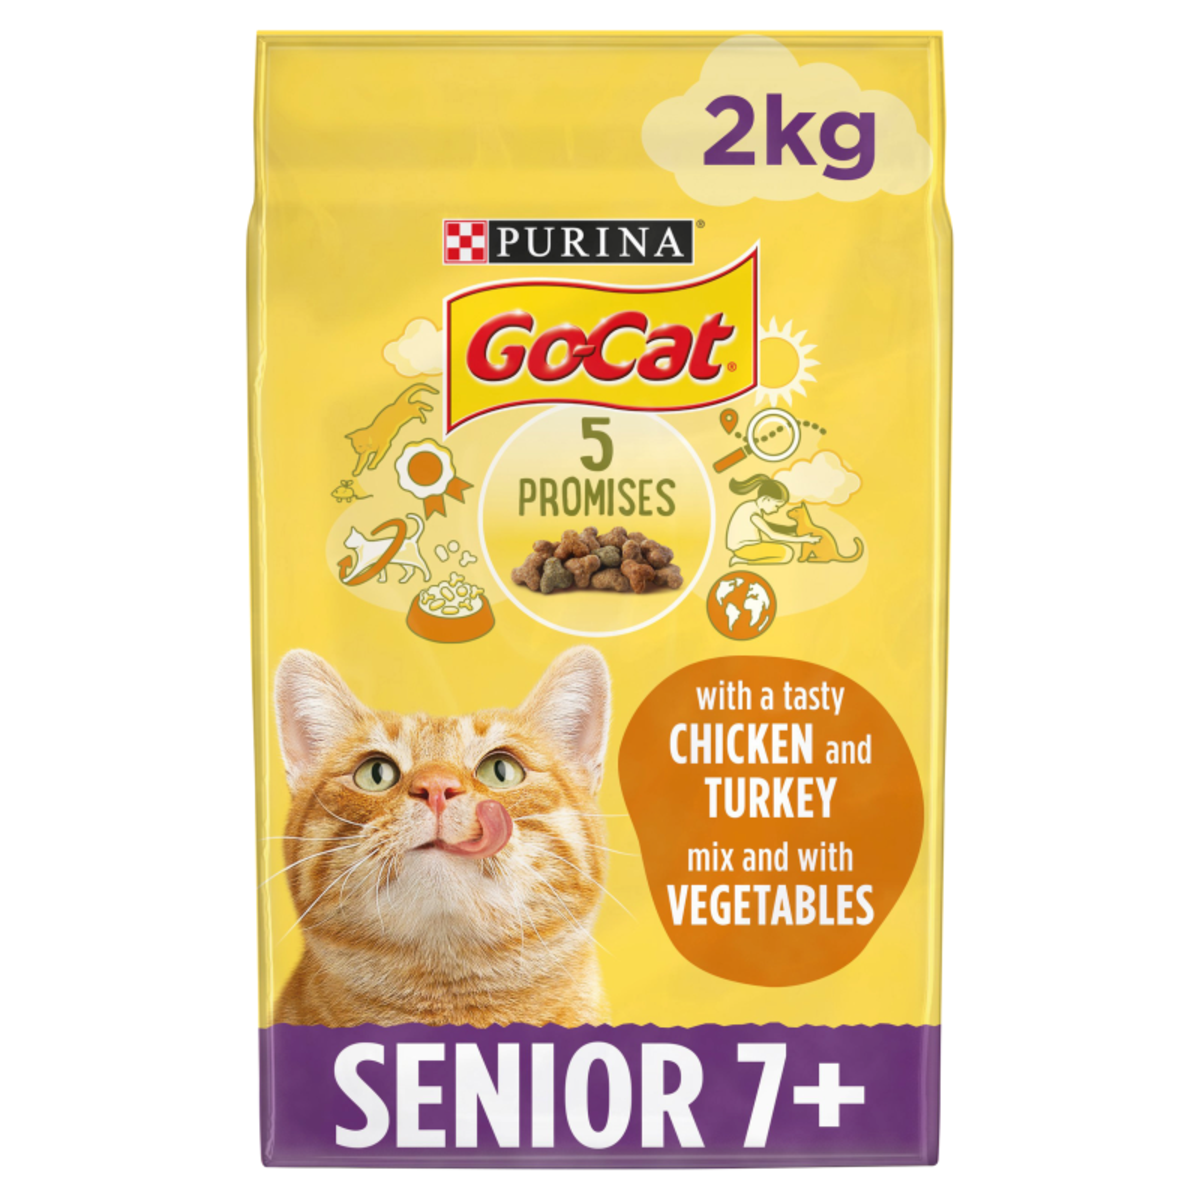 Go-Cat Senior Chicken Rice & Vegetable Dry Cat Food